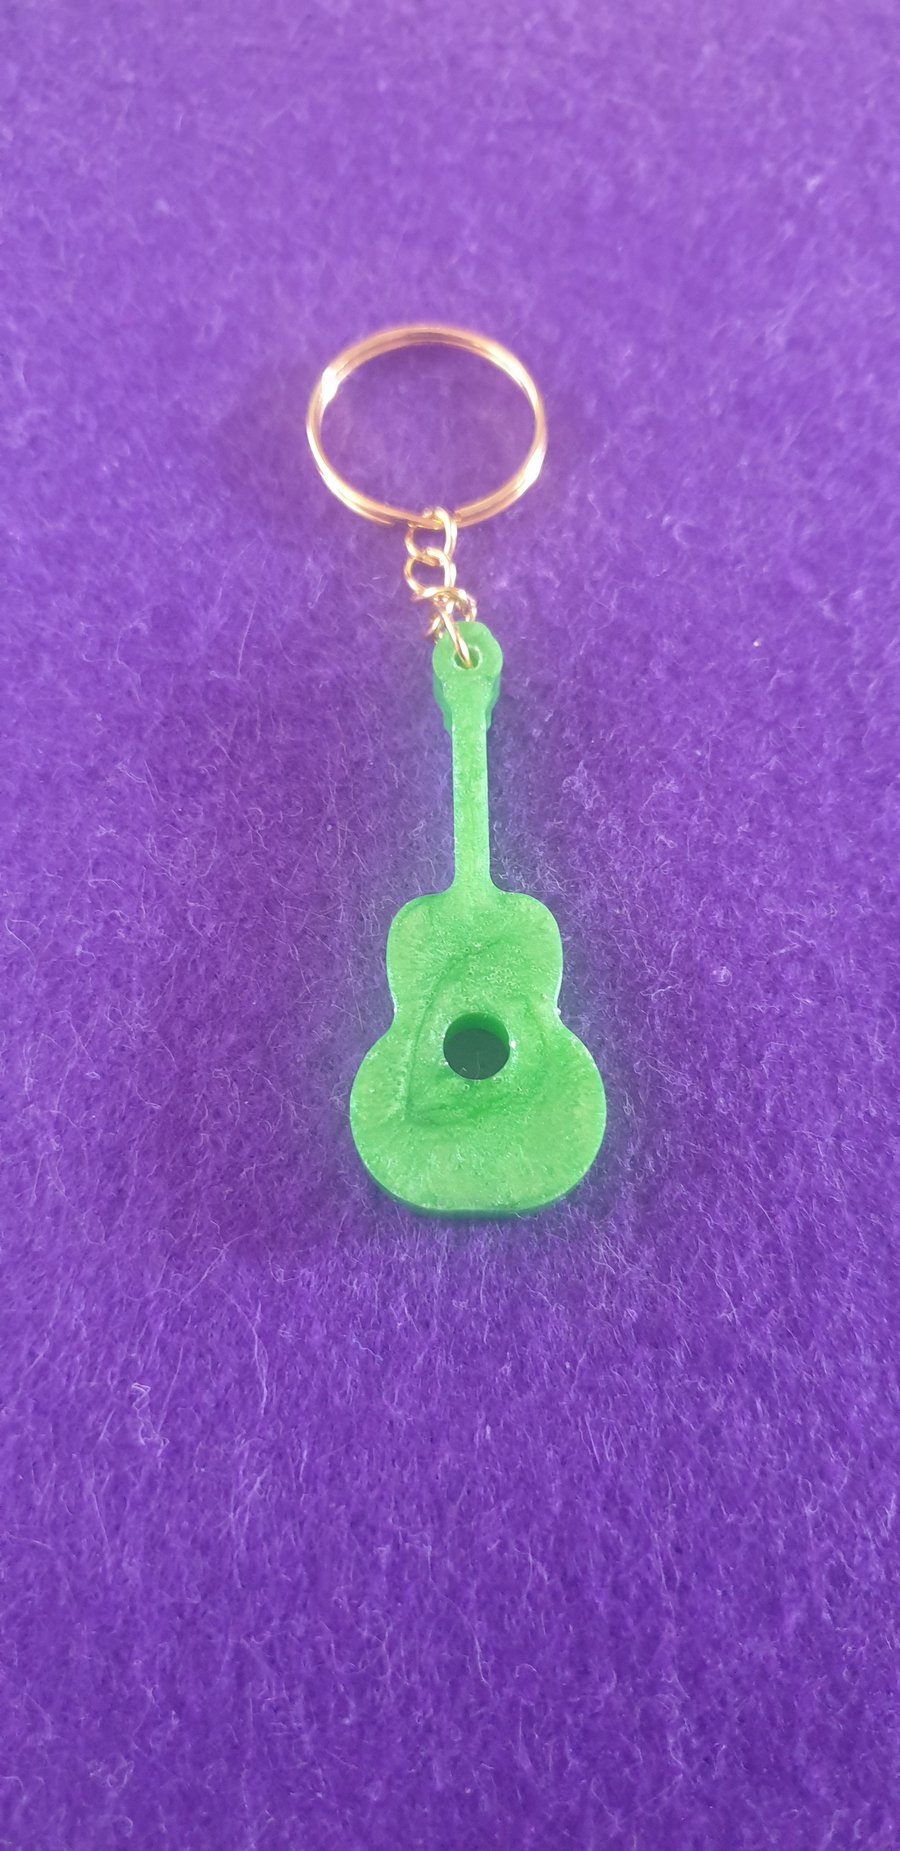 Green guitar keyring